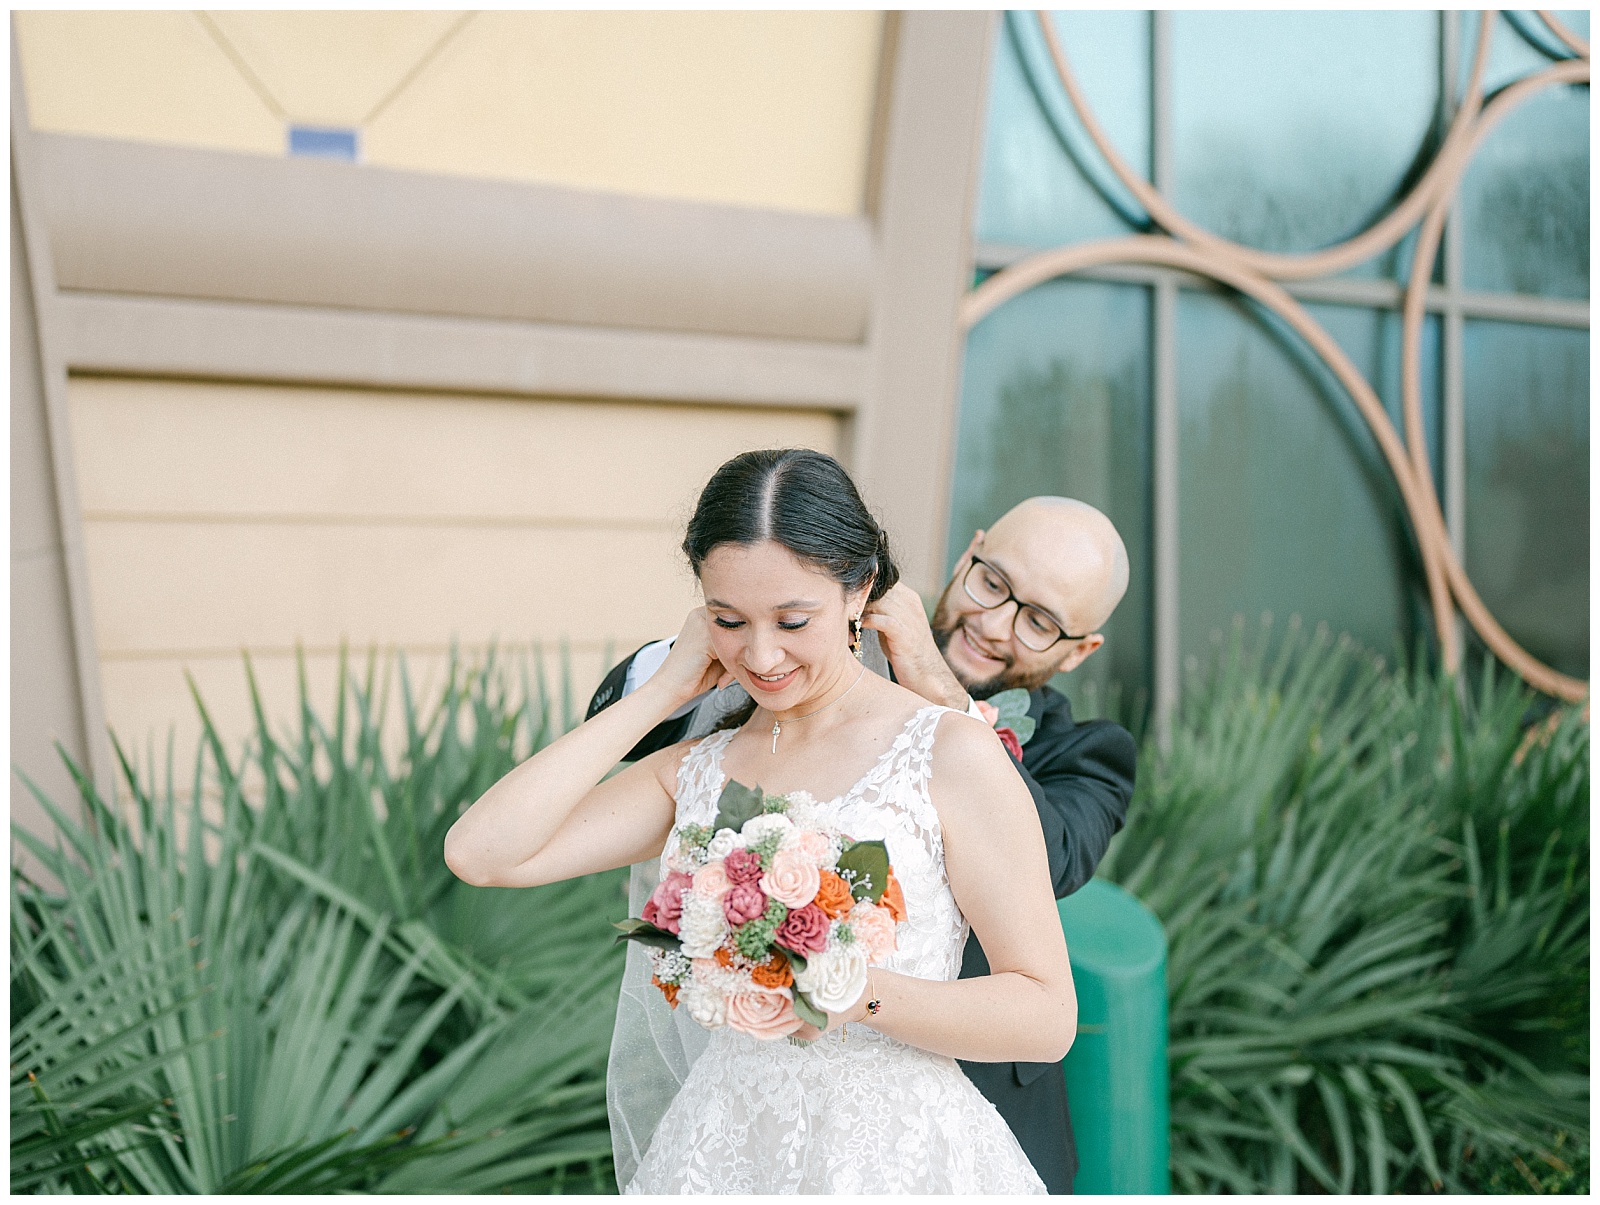  Groom helps bride put on wedding day necklace. By Elizabeth Kane Photography at Disney's Riviera Resort in Orlando Florida